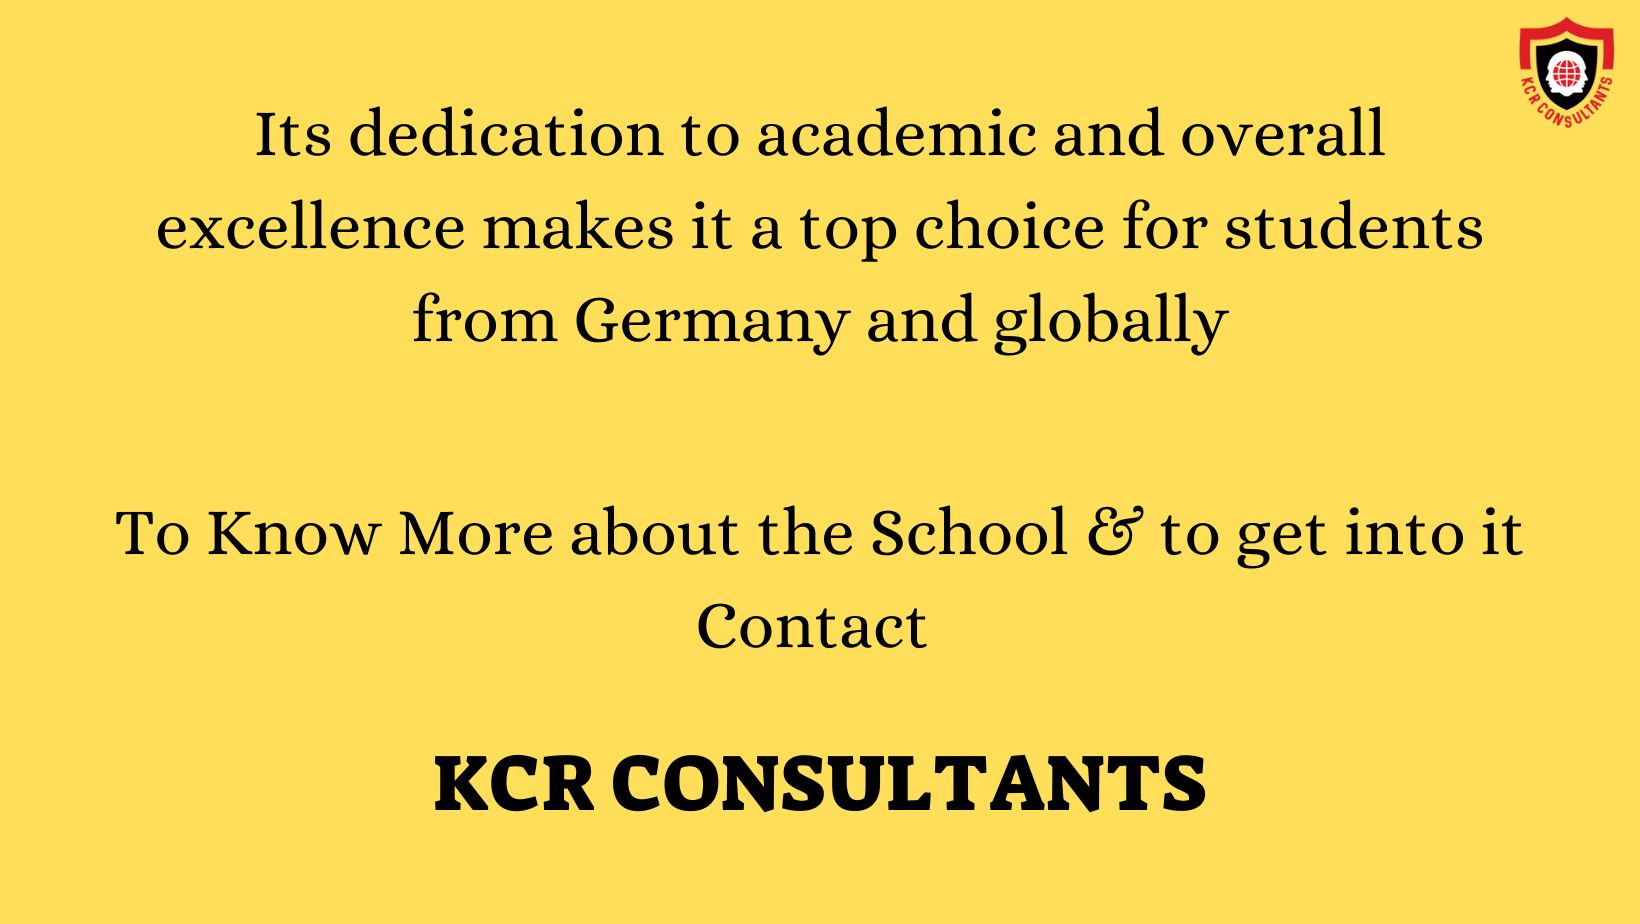 Chemnitz University of Technology - KCR CONSULTANTS - Contact us